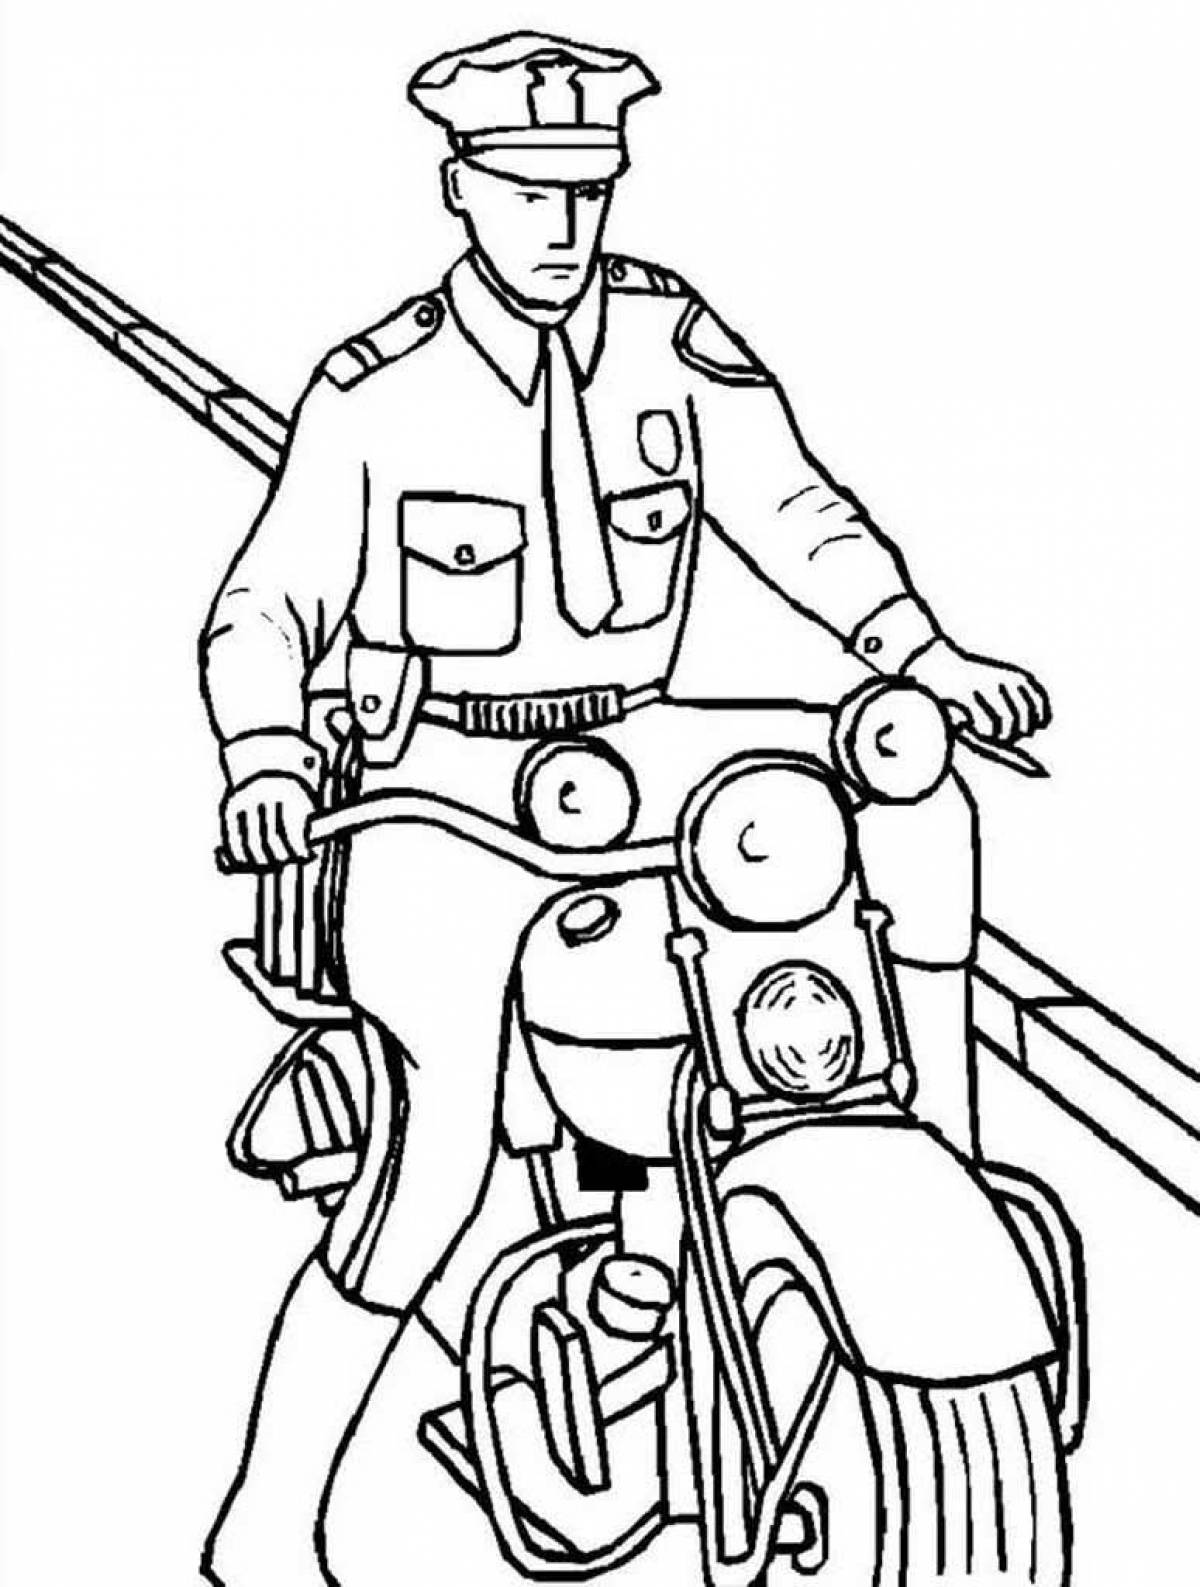 Impressive policeman coloring page